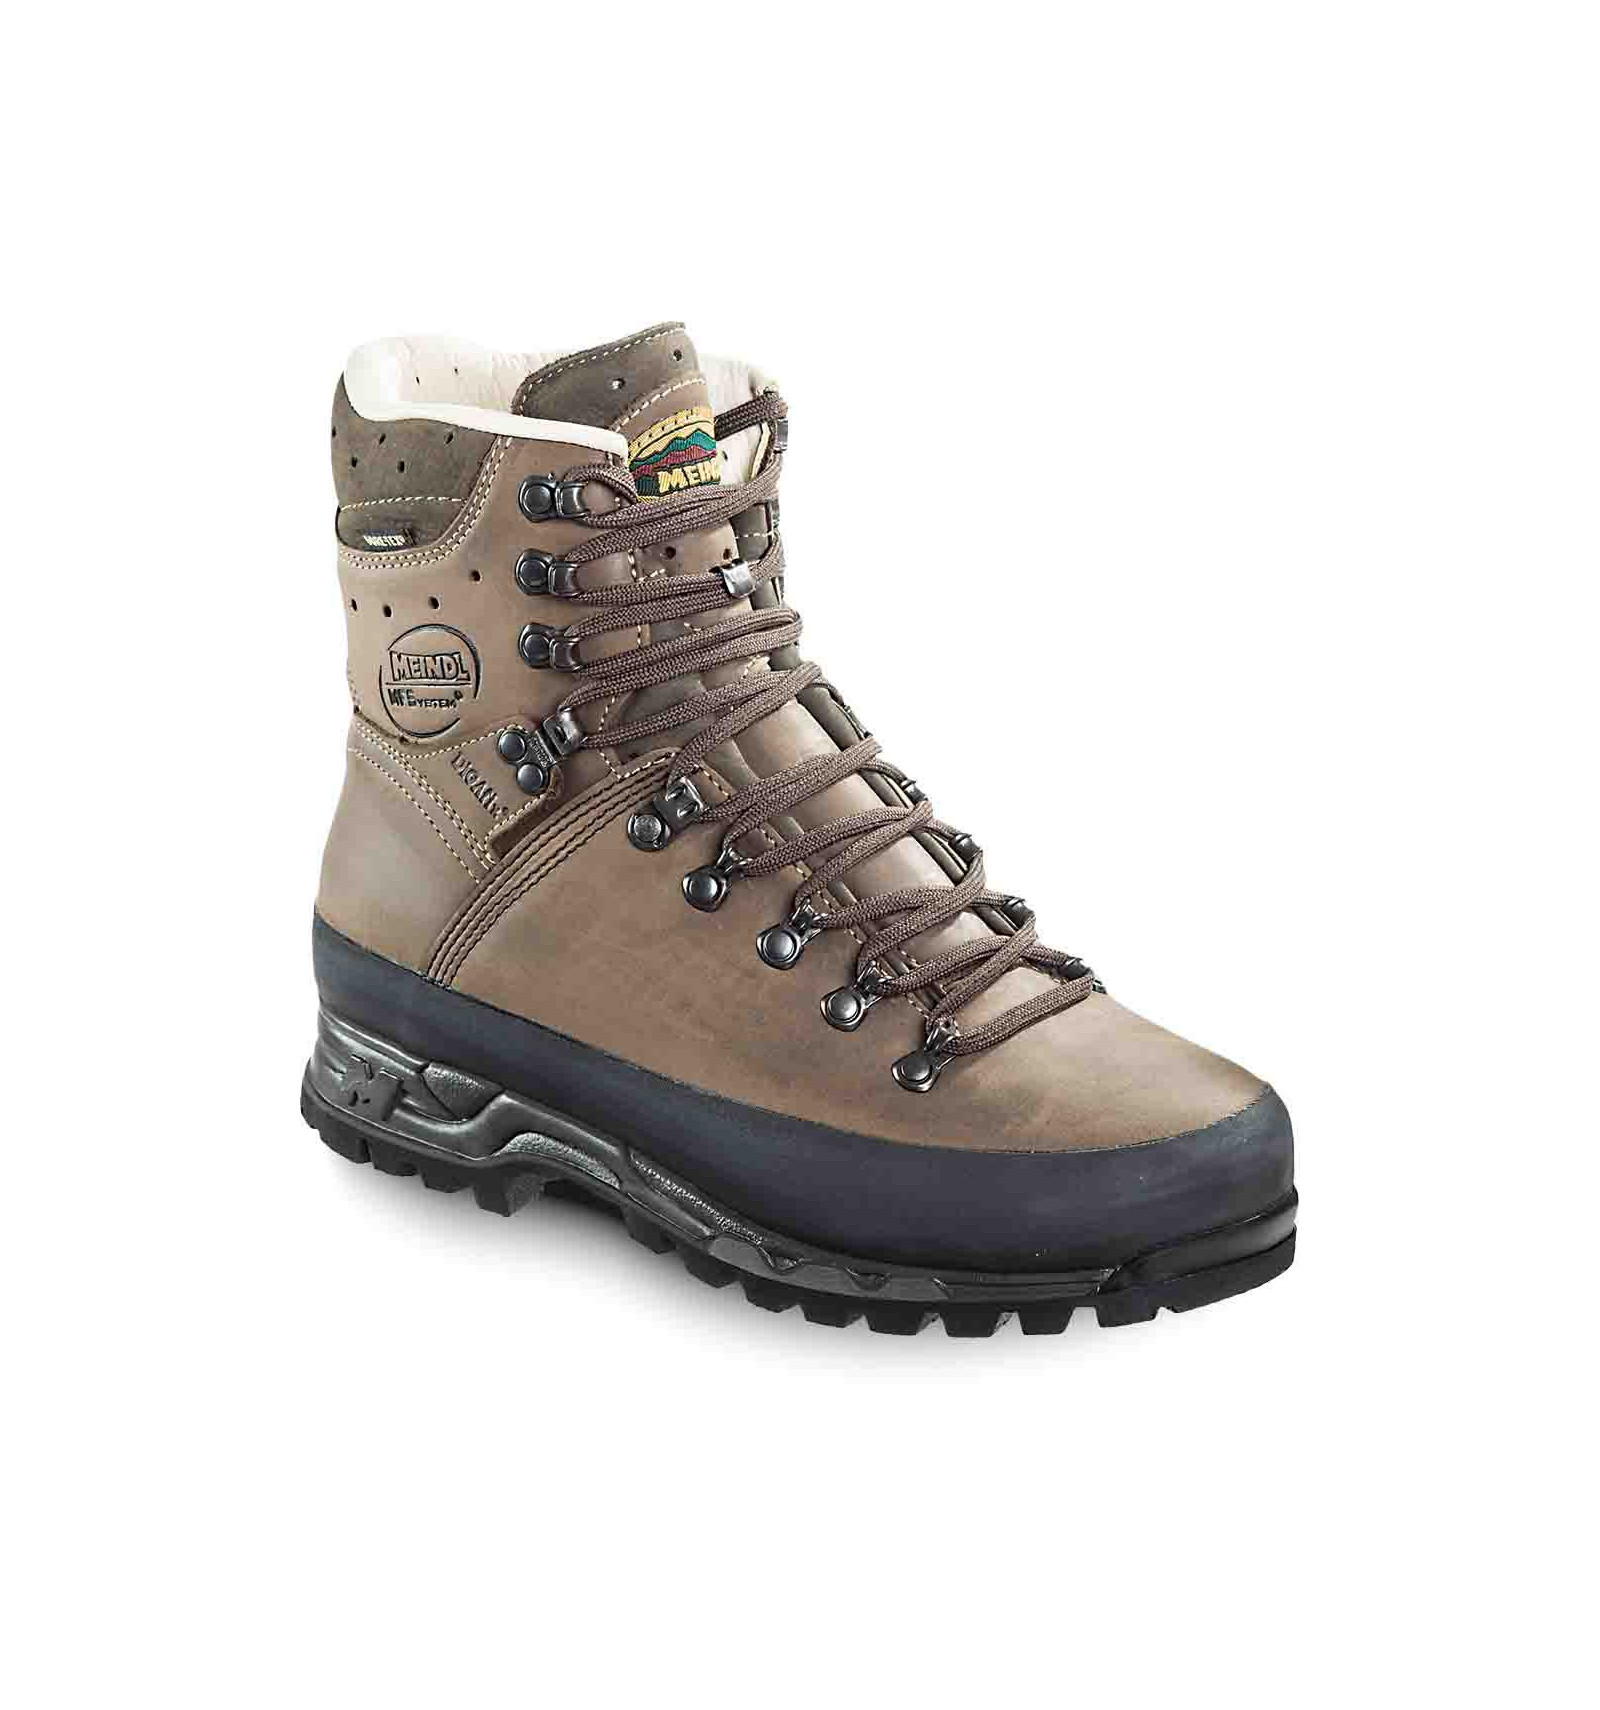 Mejores botas de montaña baratas para comprar online con envío gratis  #trekking #senderismo